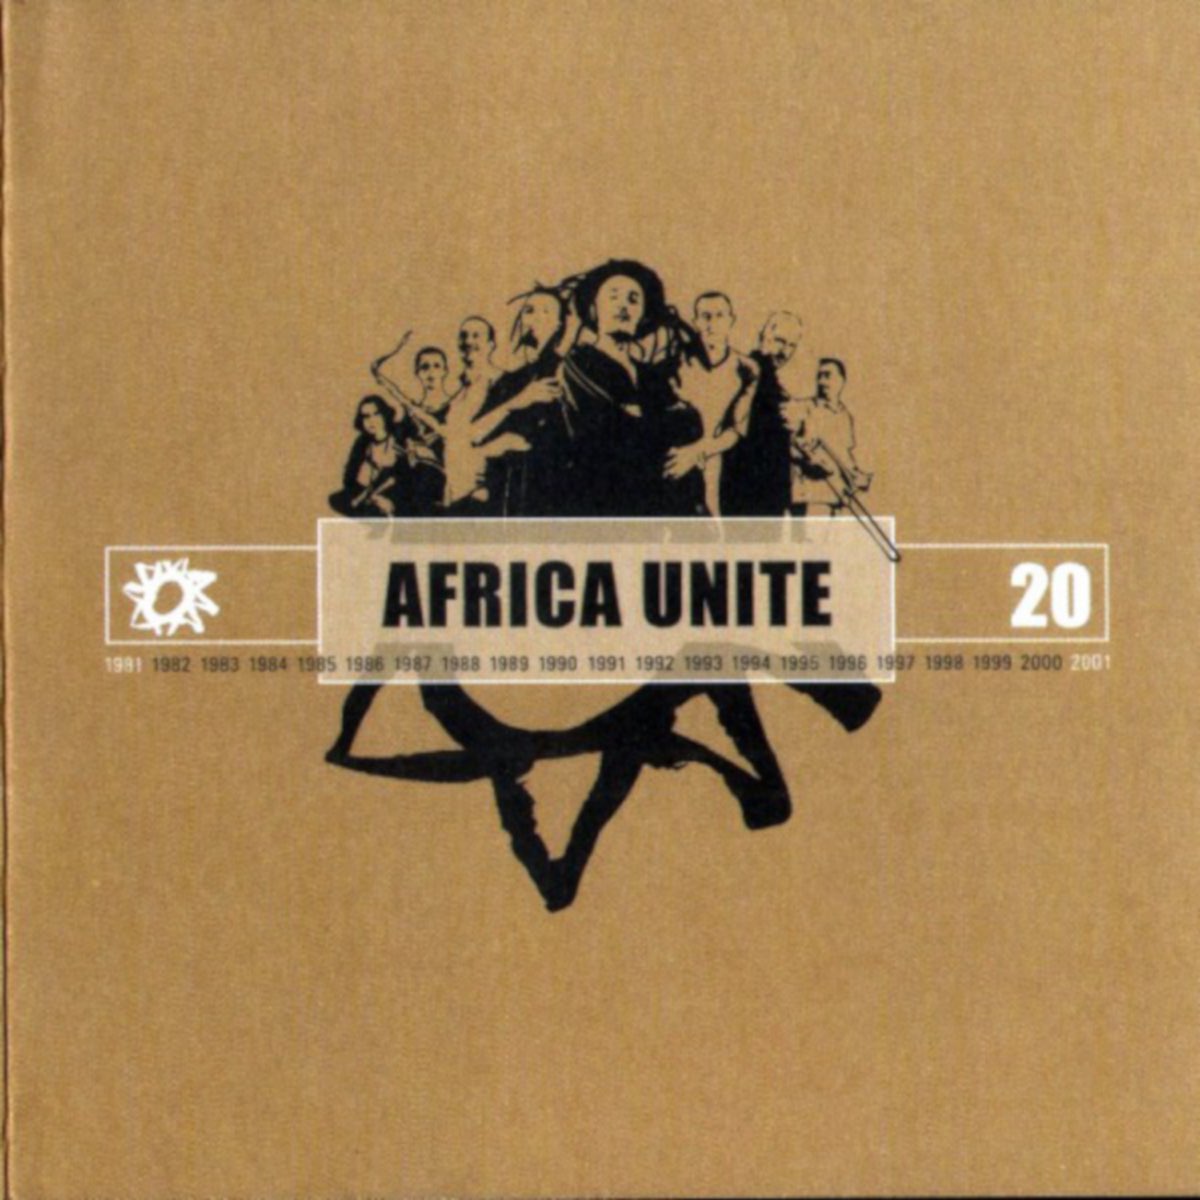 Africa unite. Радио Африка обложка альбома. Радио Африка альбом винил.